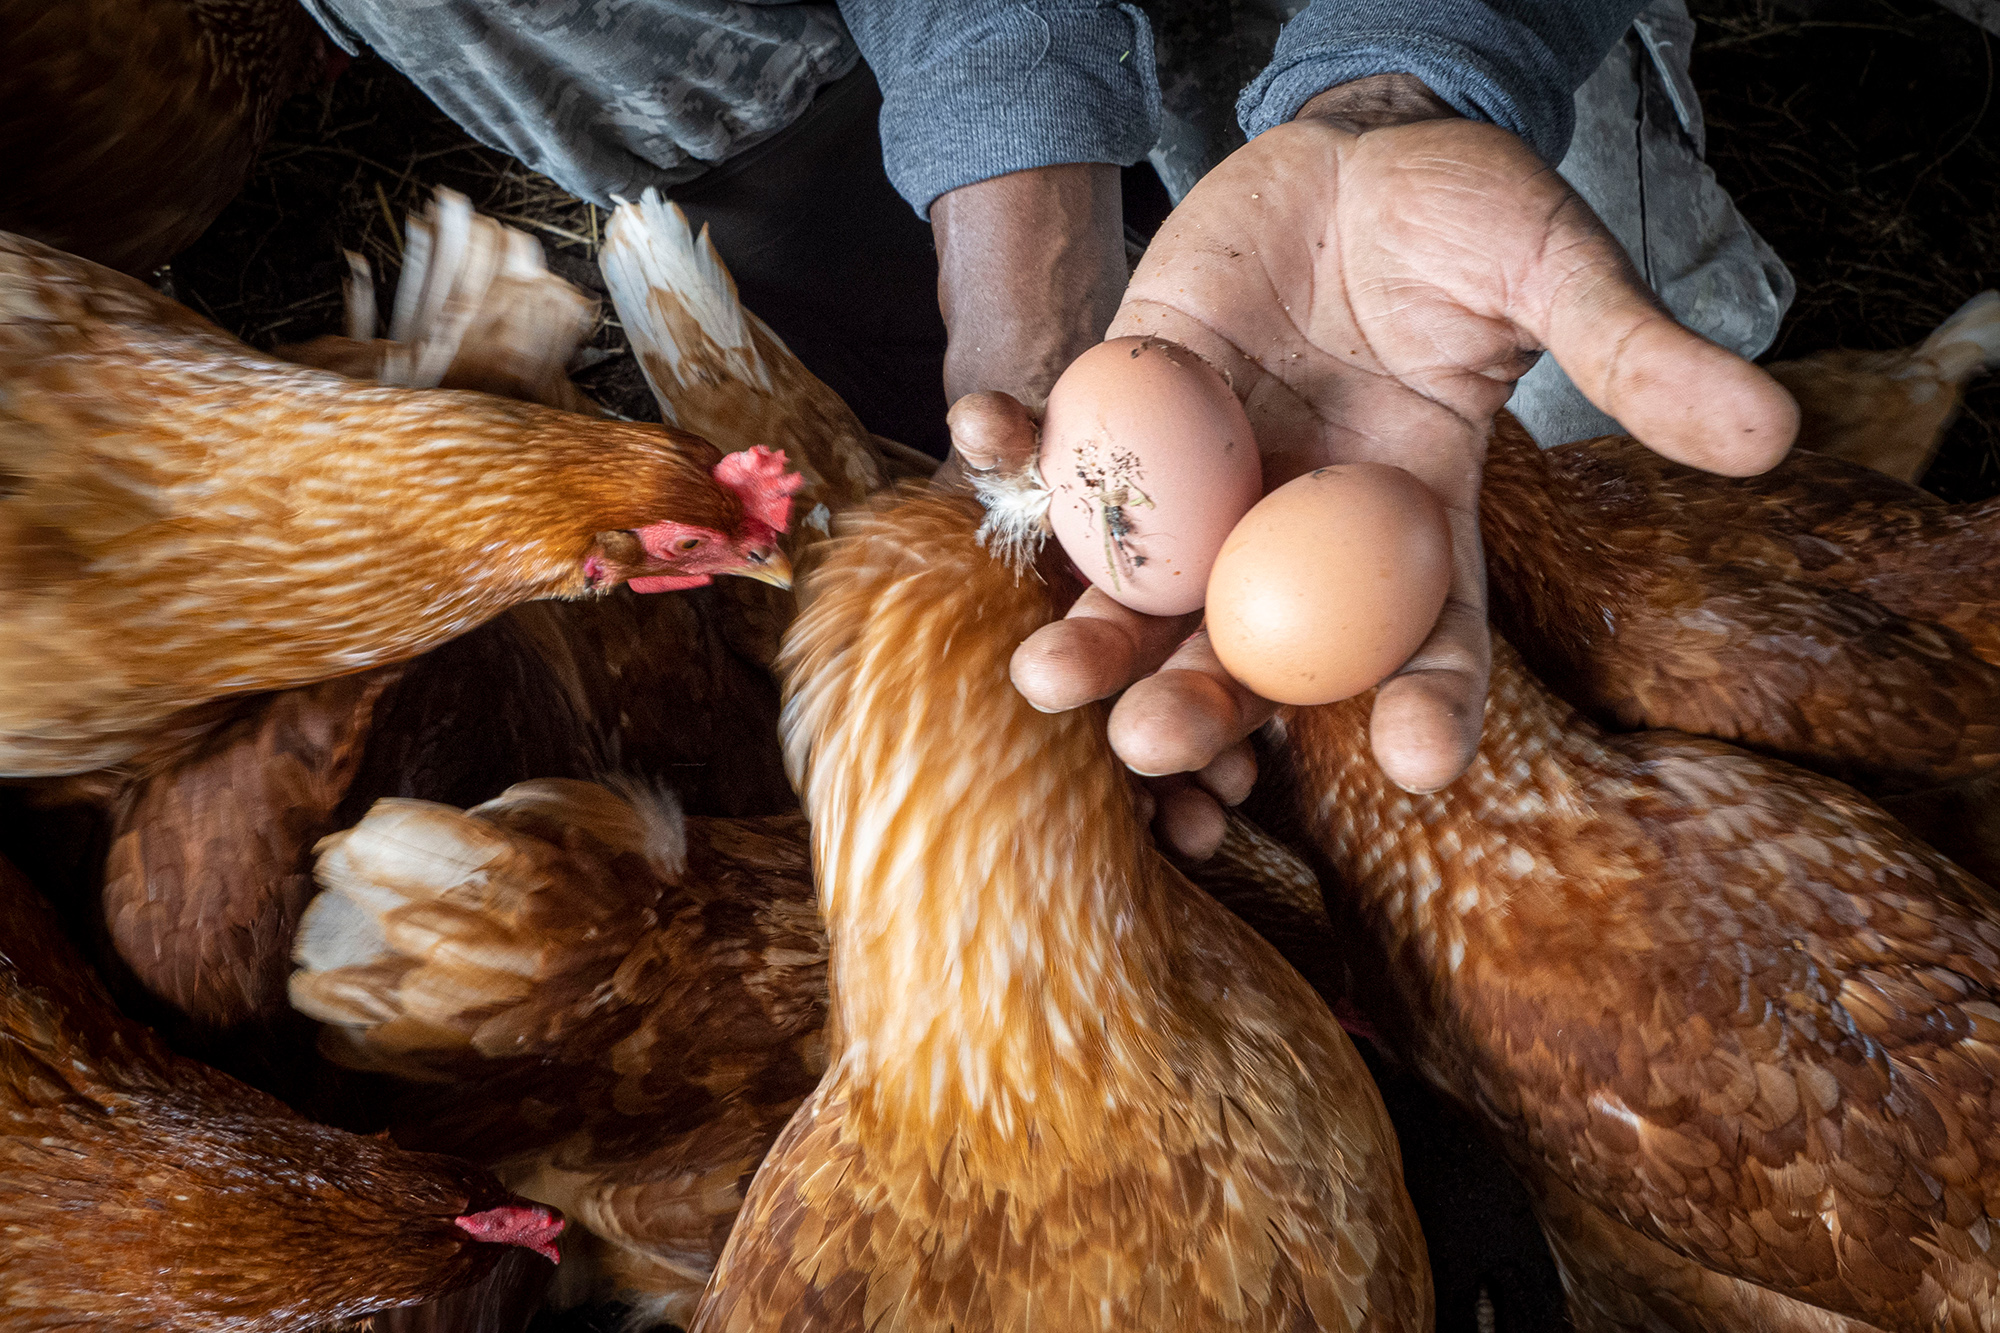 fresh-eggs-gathered-from-livestock-farm-photo.jpg